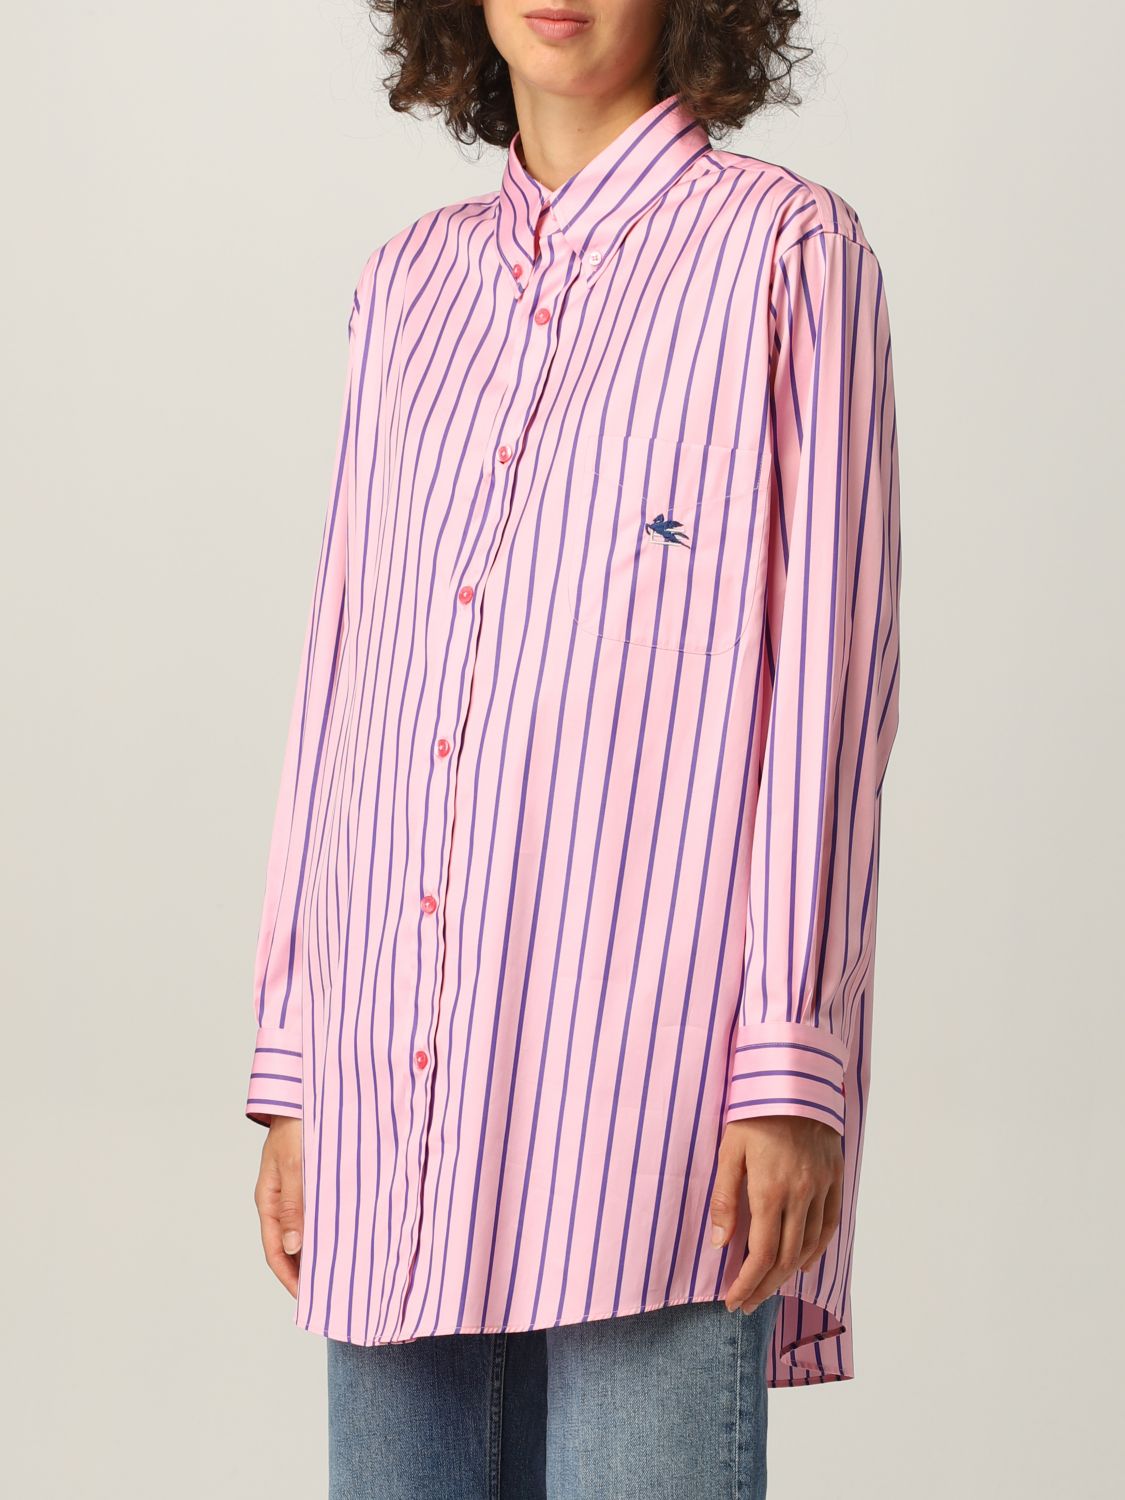 ETRO: GE01 shirt in striped cotton - Pink | Etro shirt 183333816 